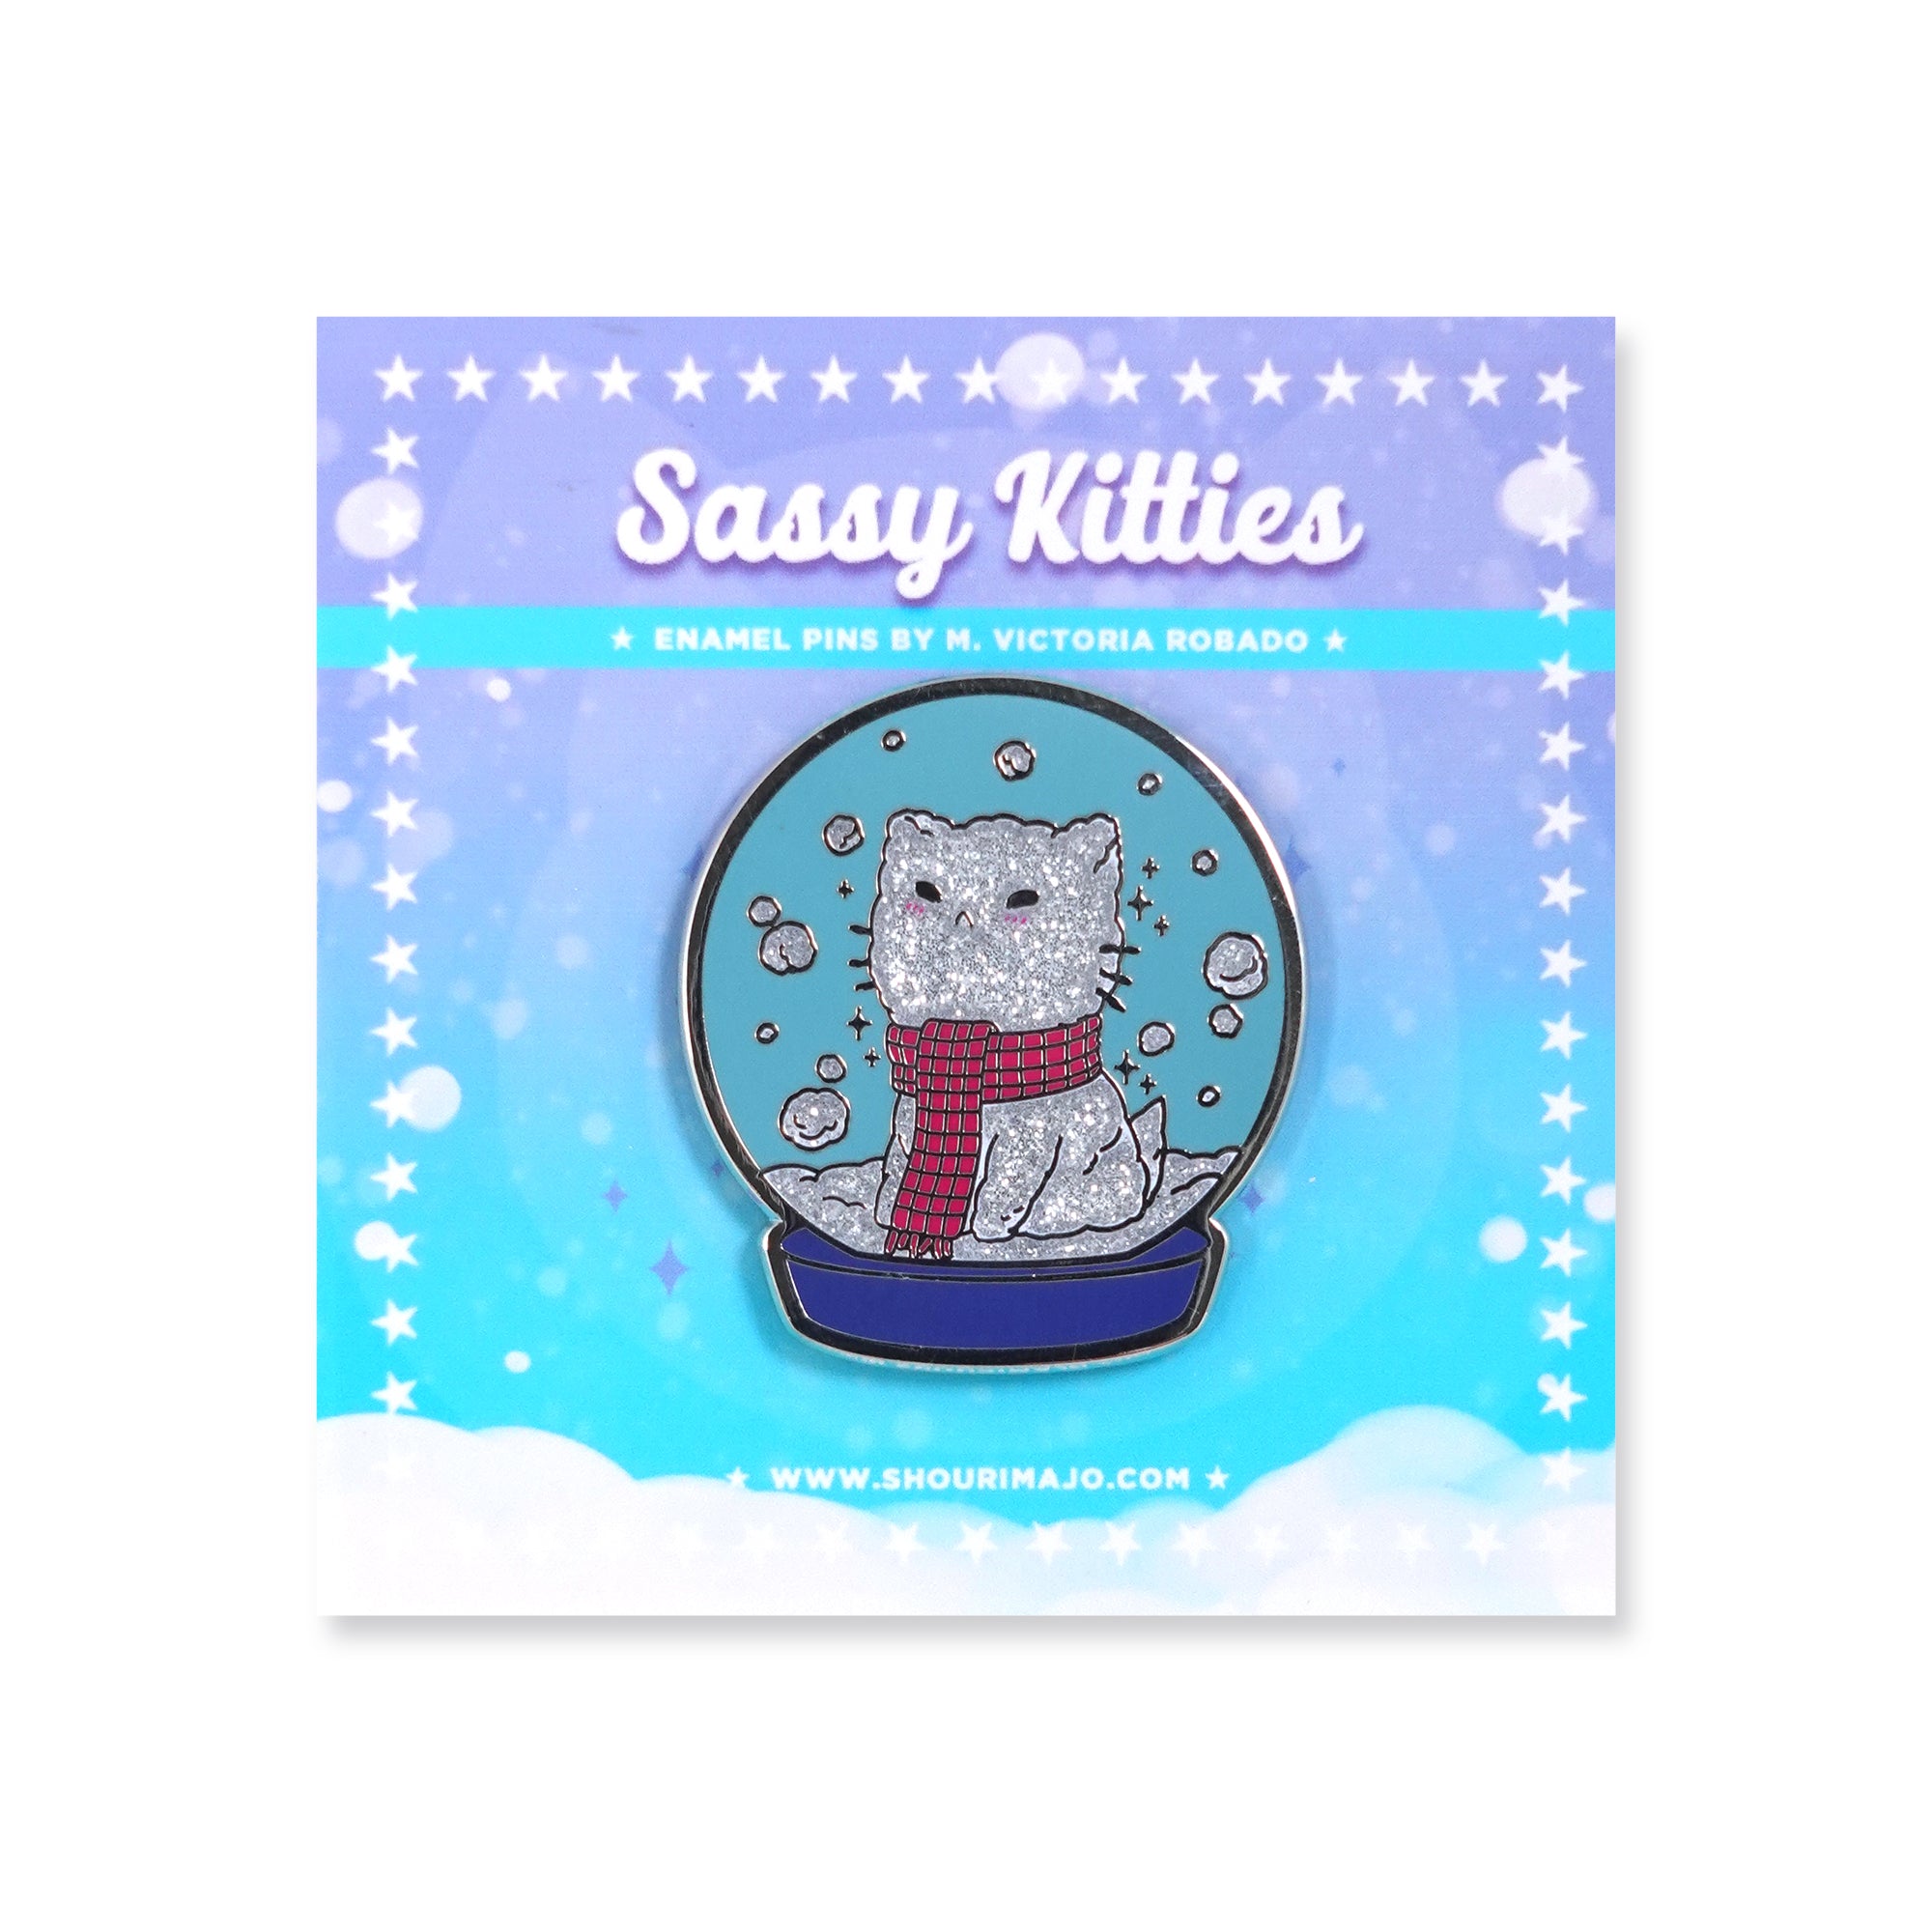 Sassy Kitties Snowglobe Enamel Pin